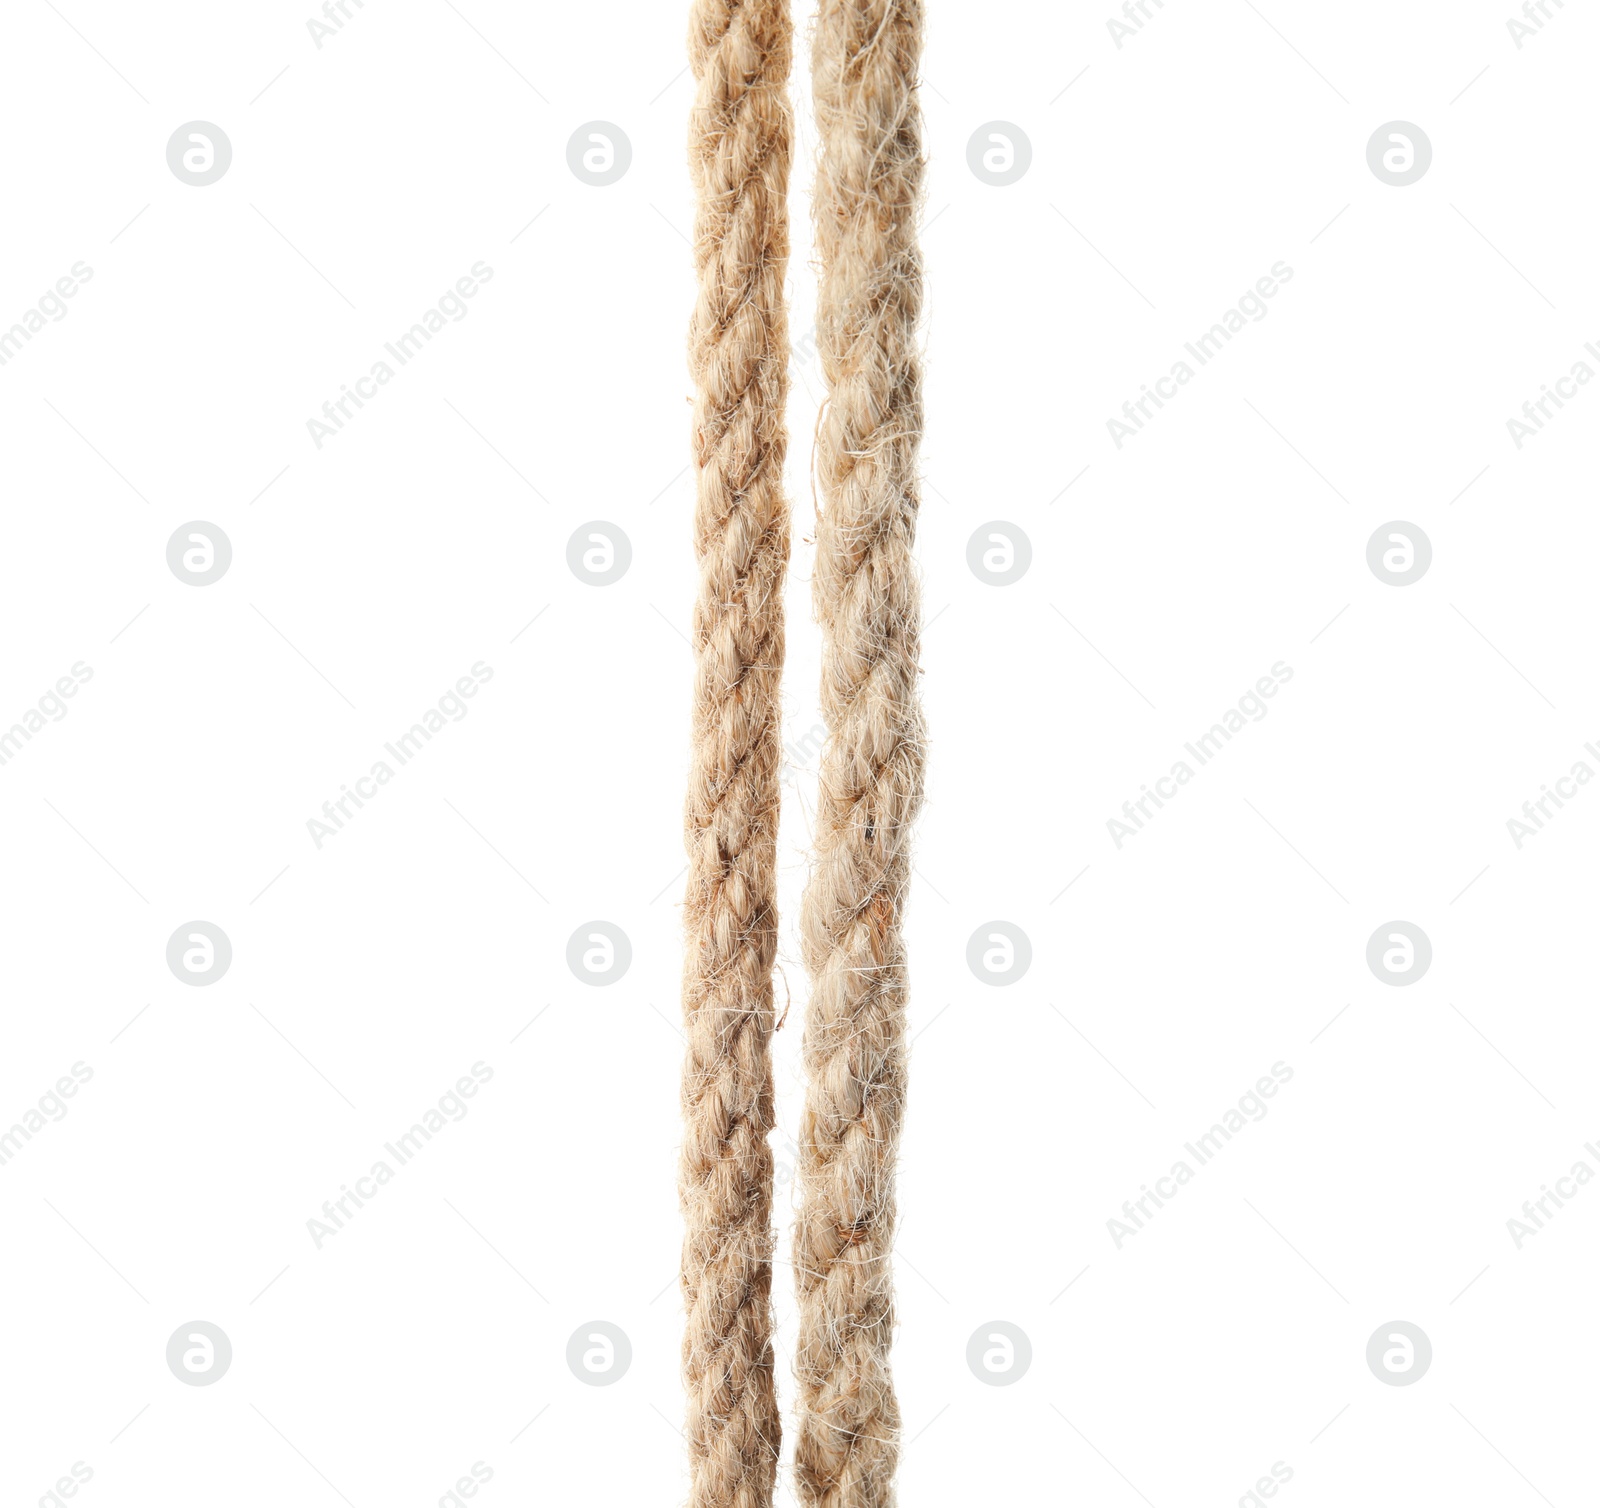 Photo of Hemp ropes on white background. Organic material